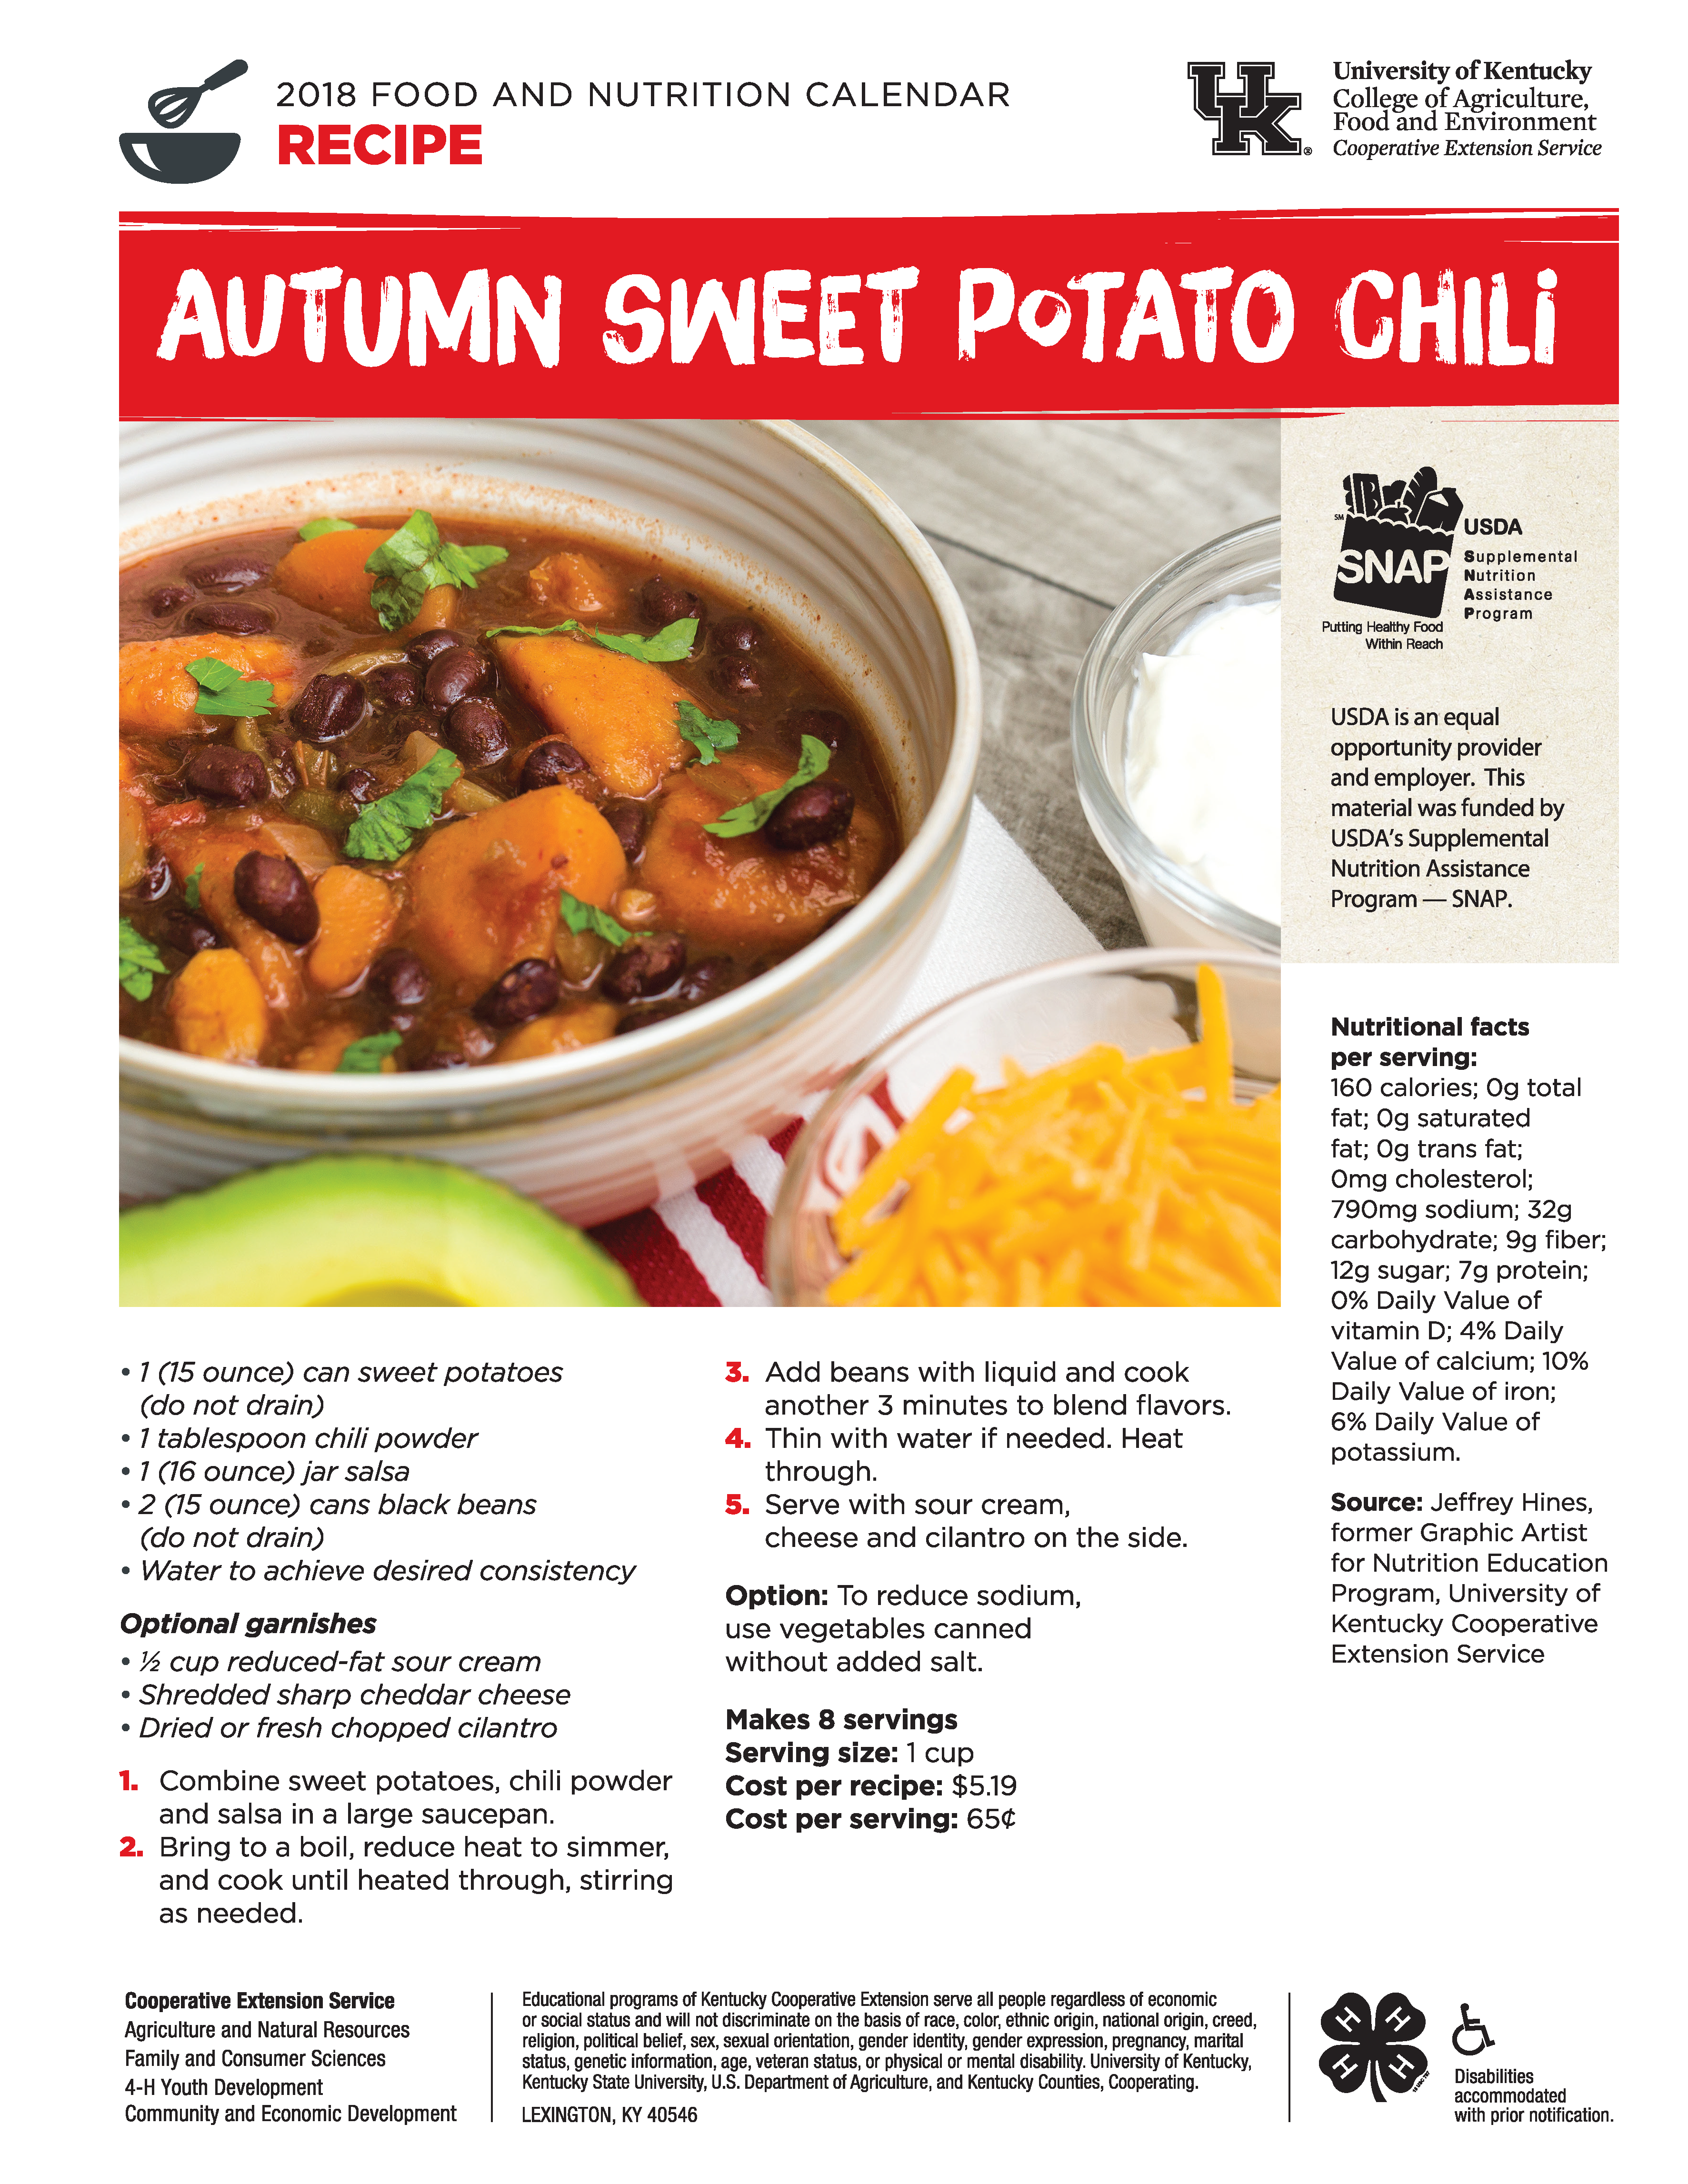 Autumn Sweet Potato Chili recipe